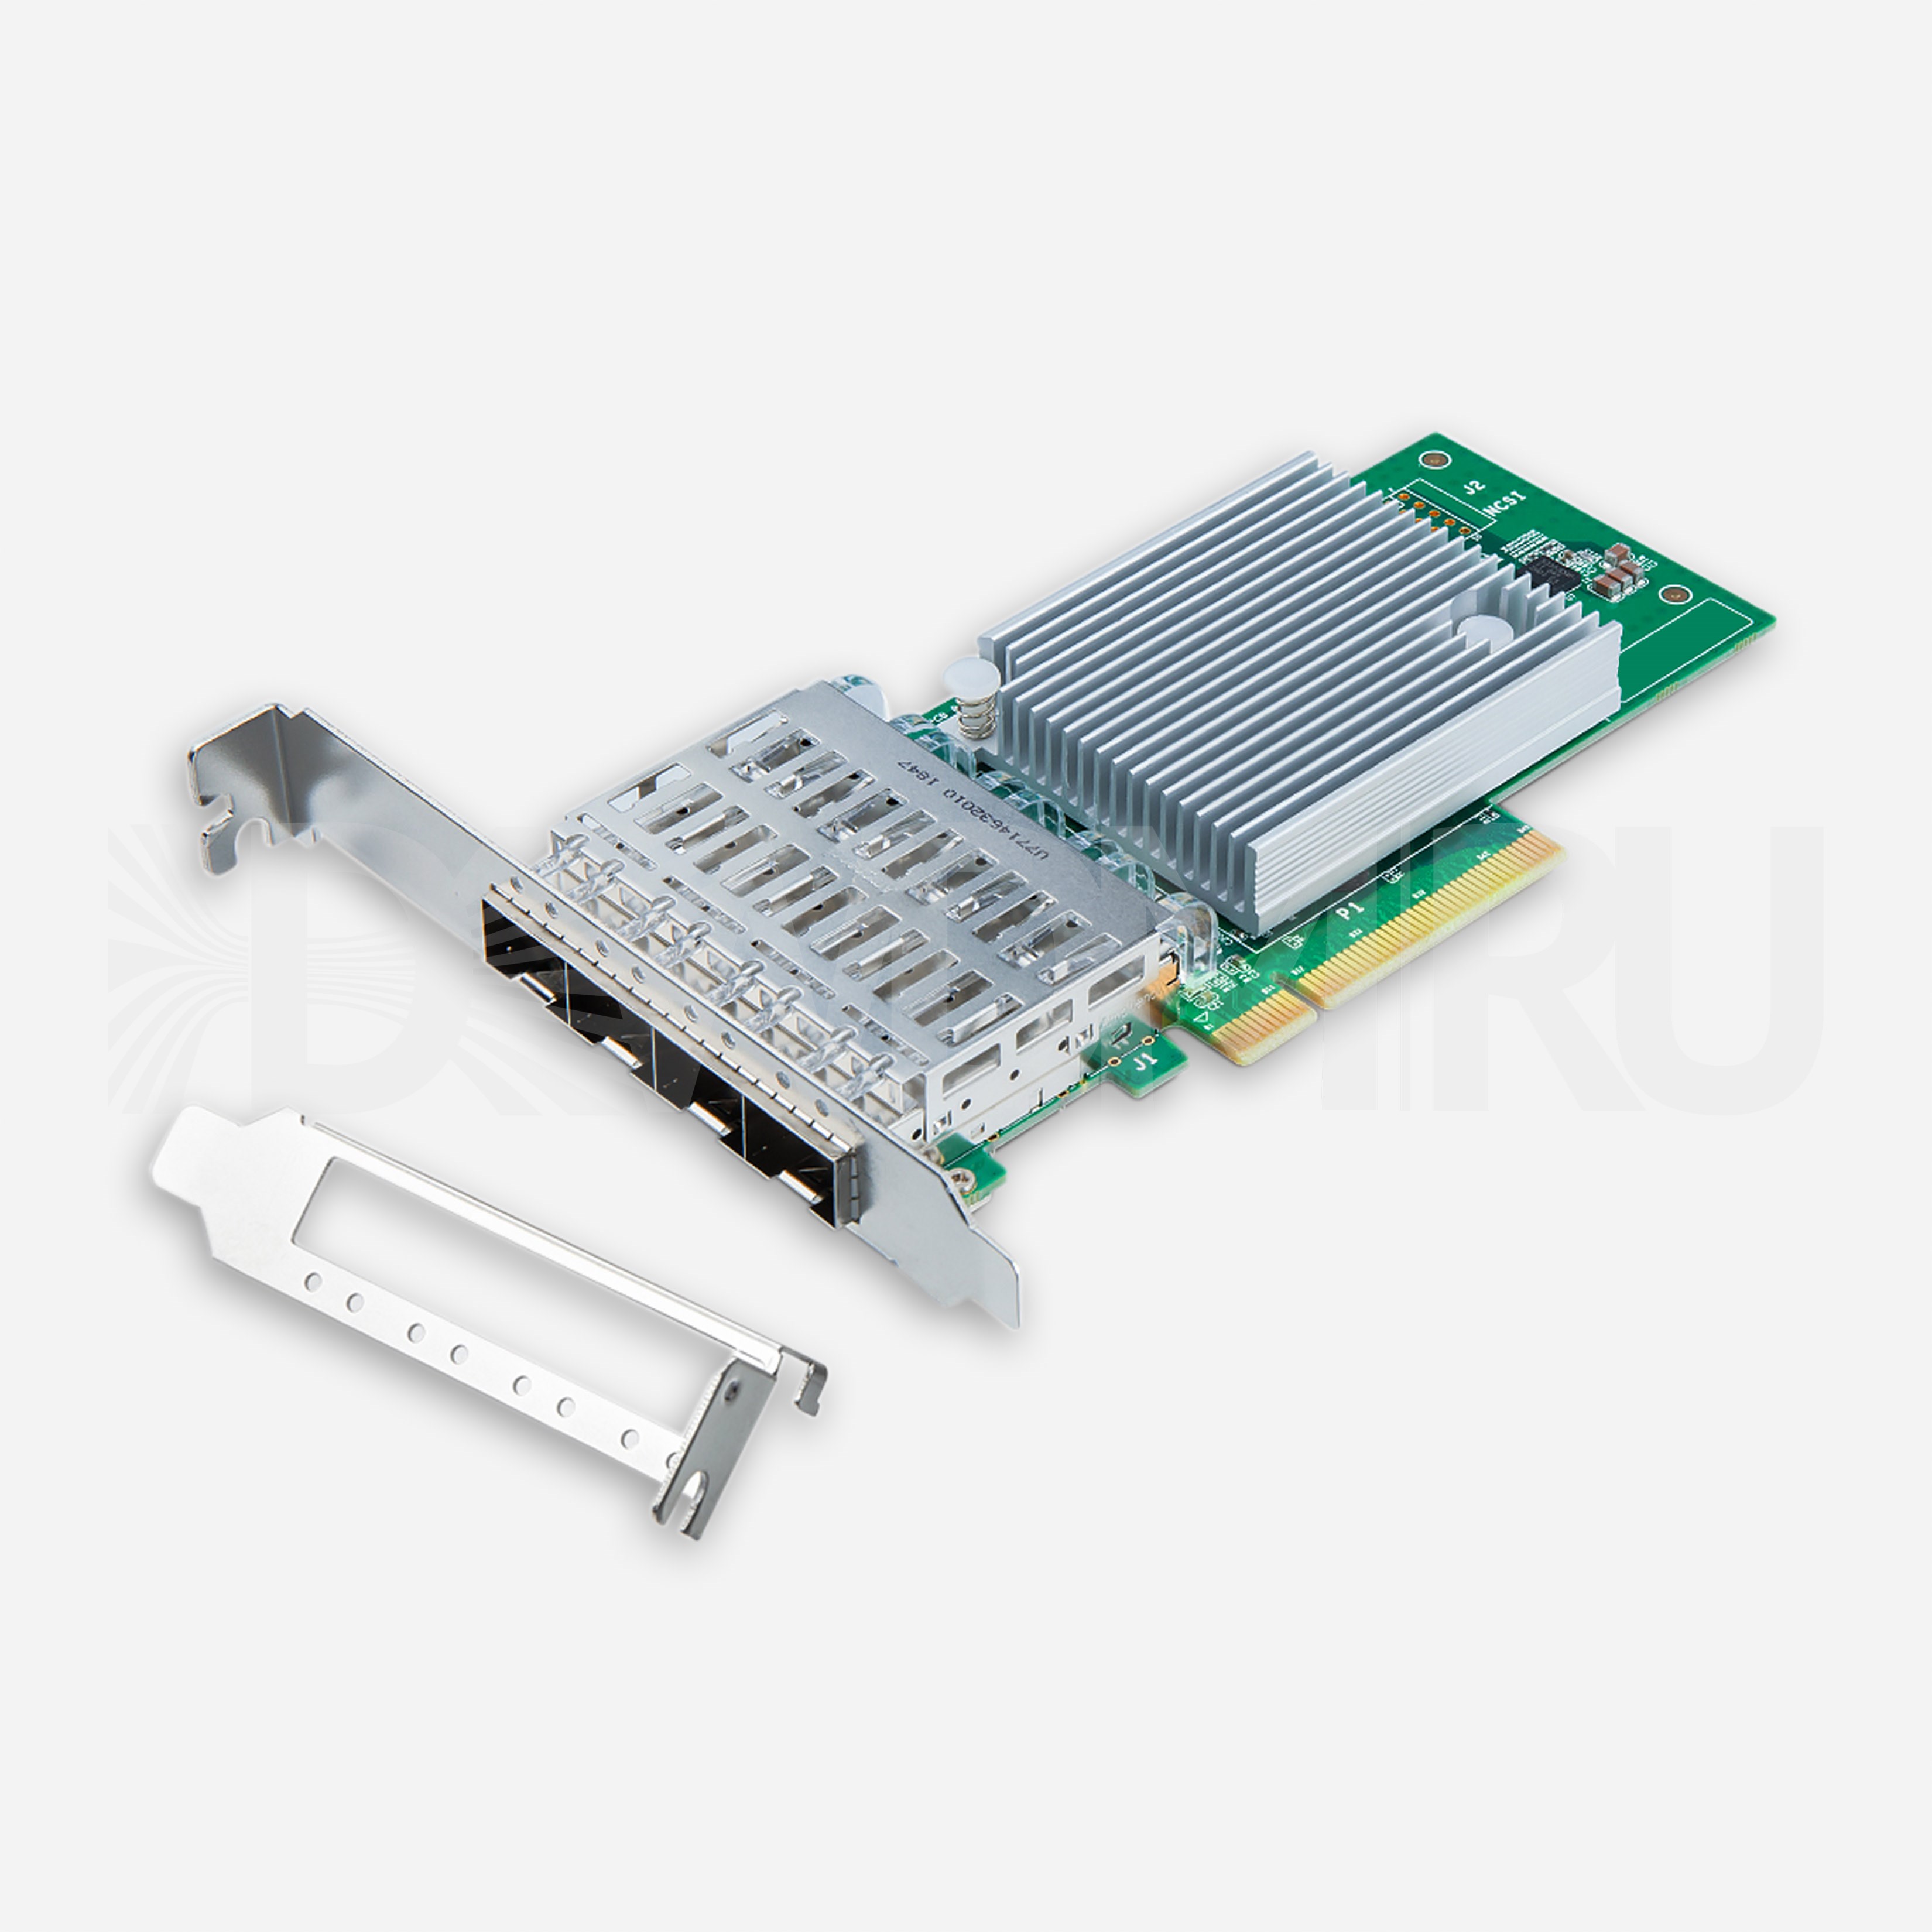 Сетевая карта 10 Gb/s (NIC), 2 порта SFP+, Intel XL710-BM2 Controller, PCIe 3.0 X8 - ДВДМ.РУ (DSO-N-10G2S1-XL710-X30-8)